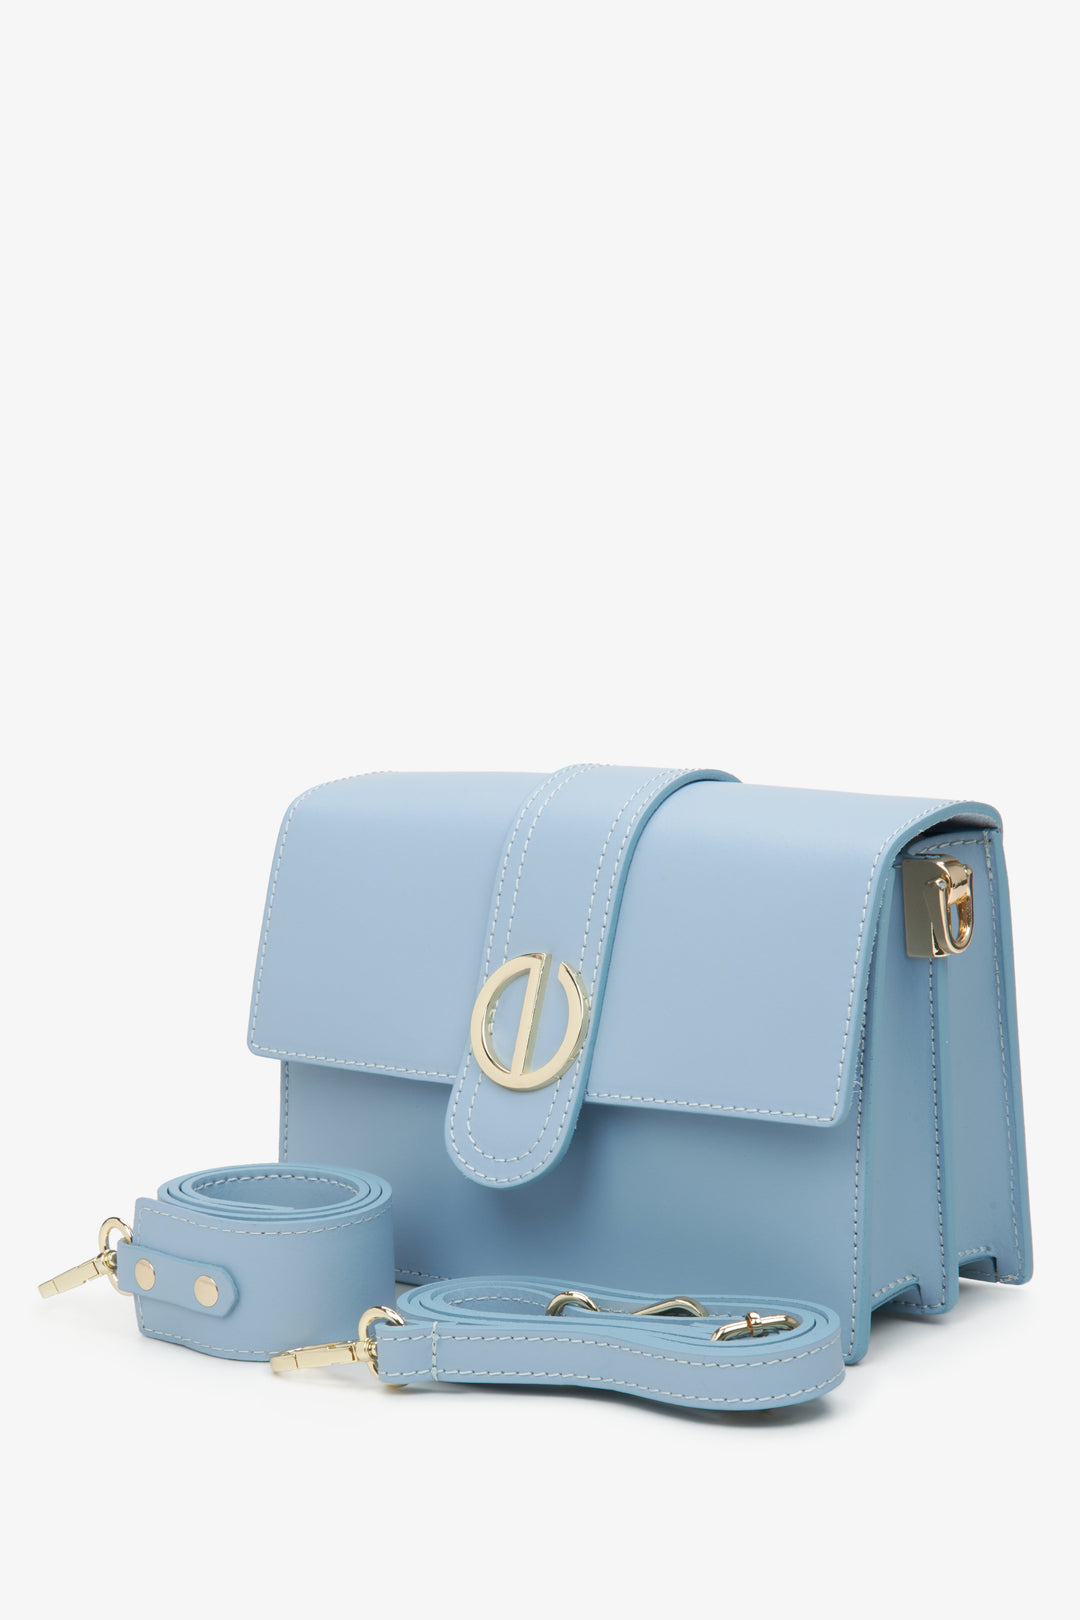 Women's light blue handy bag with gold hardware Estro.